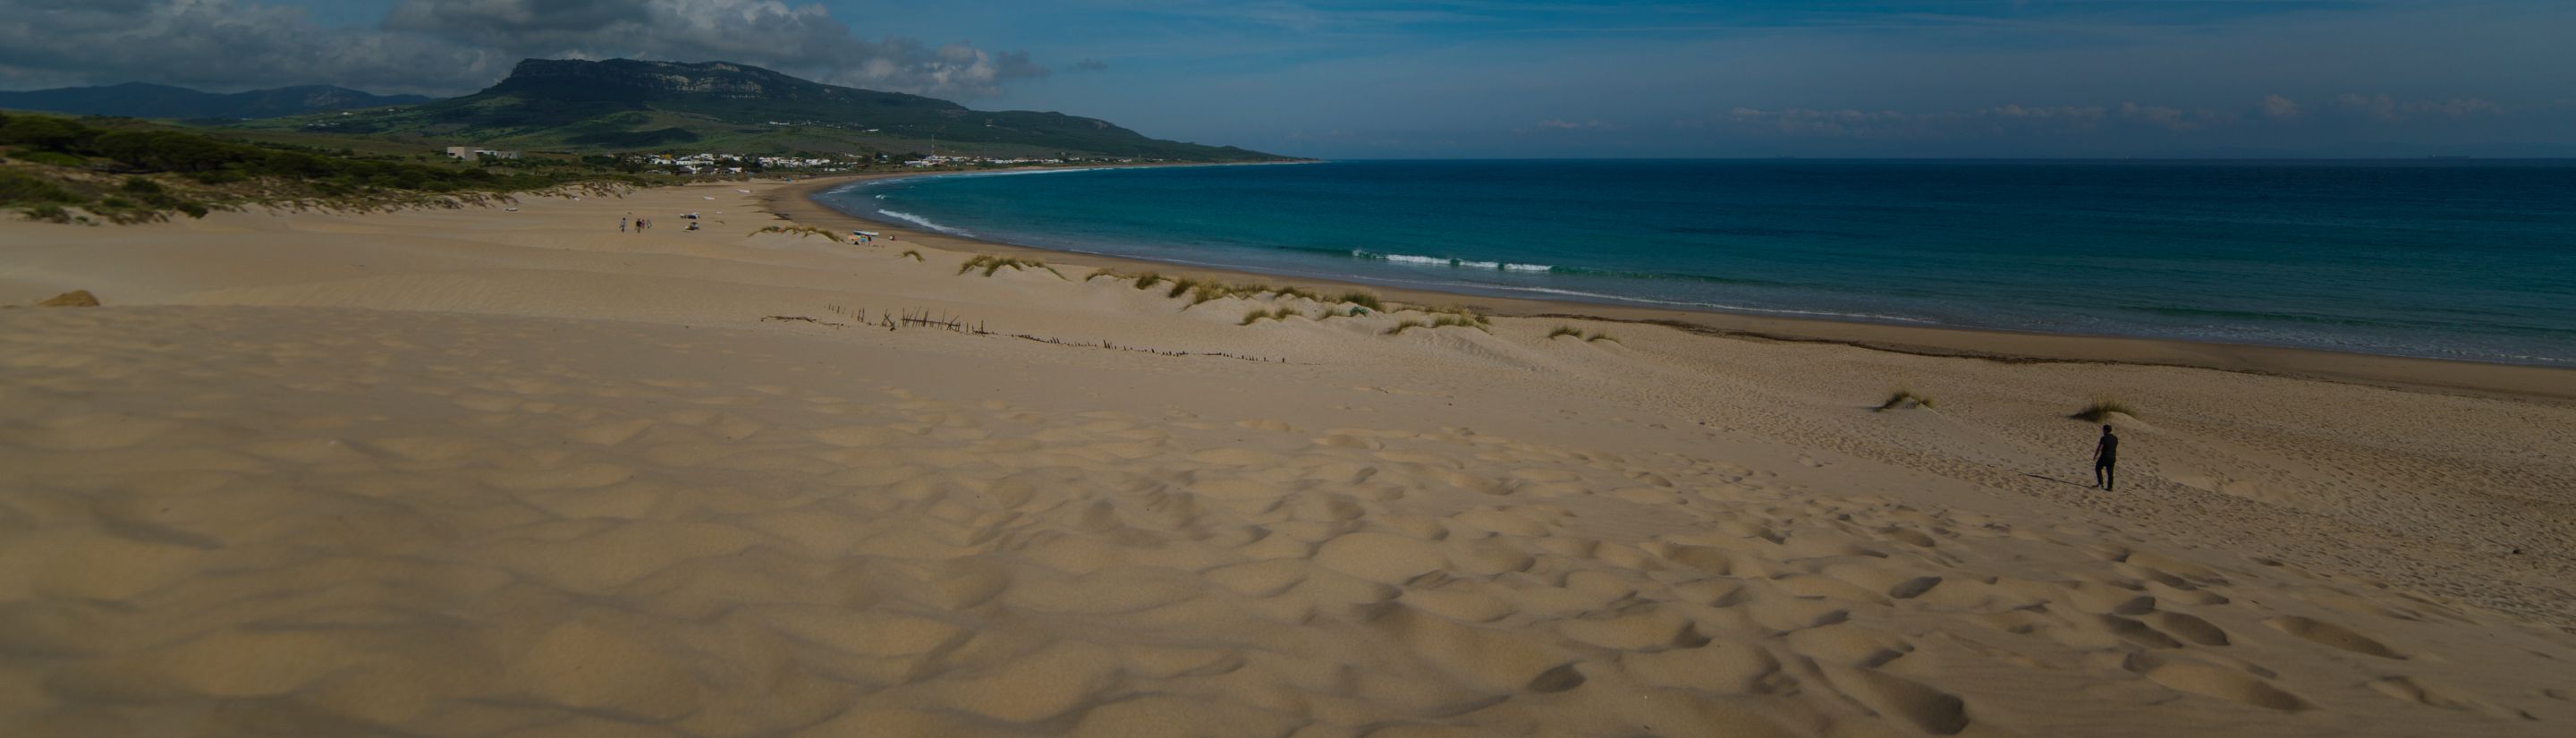 Sandstrand am Atlantik bei Cadiz in Andalusien Spanien